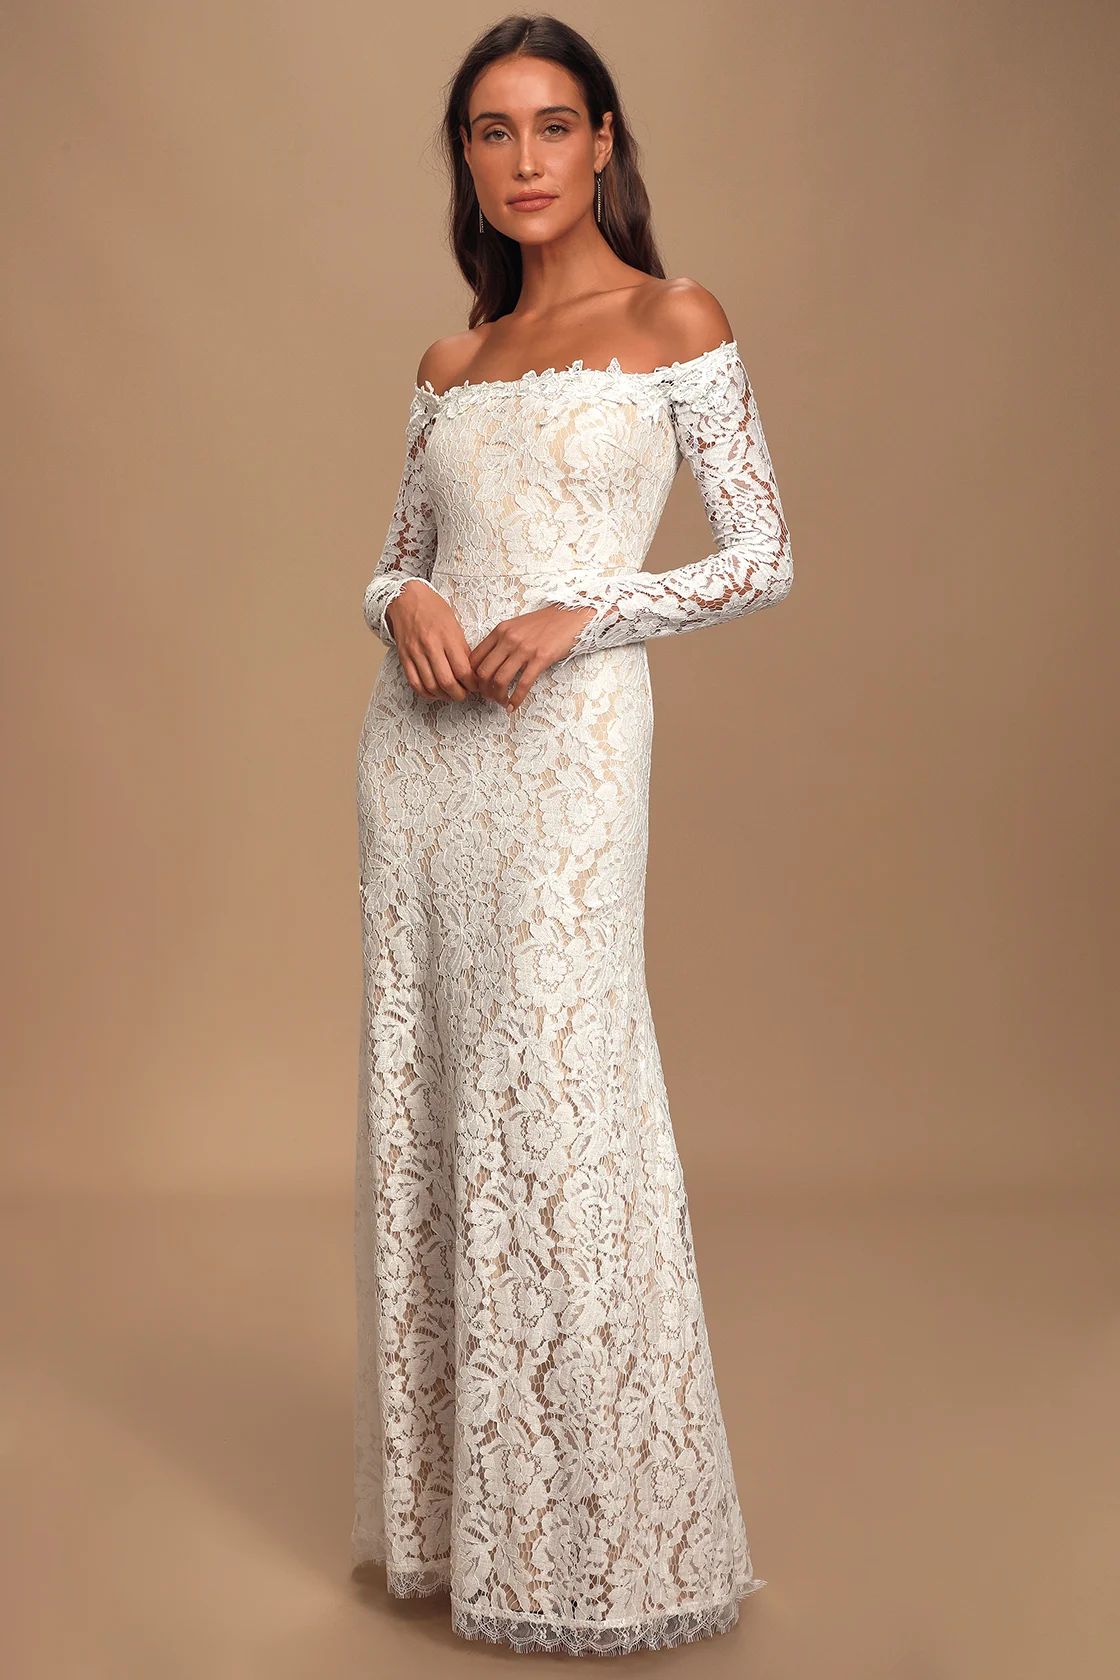 Romance Dreamer White Lace Off-the-Shoulder Maxi Dress | Lulus